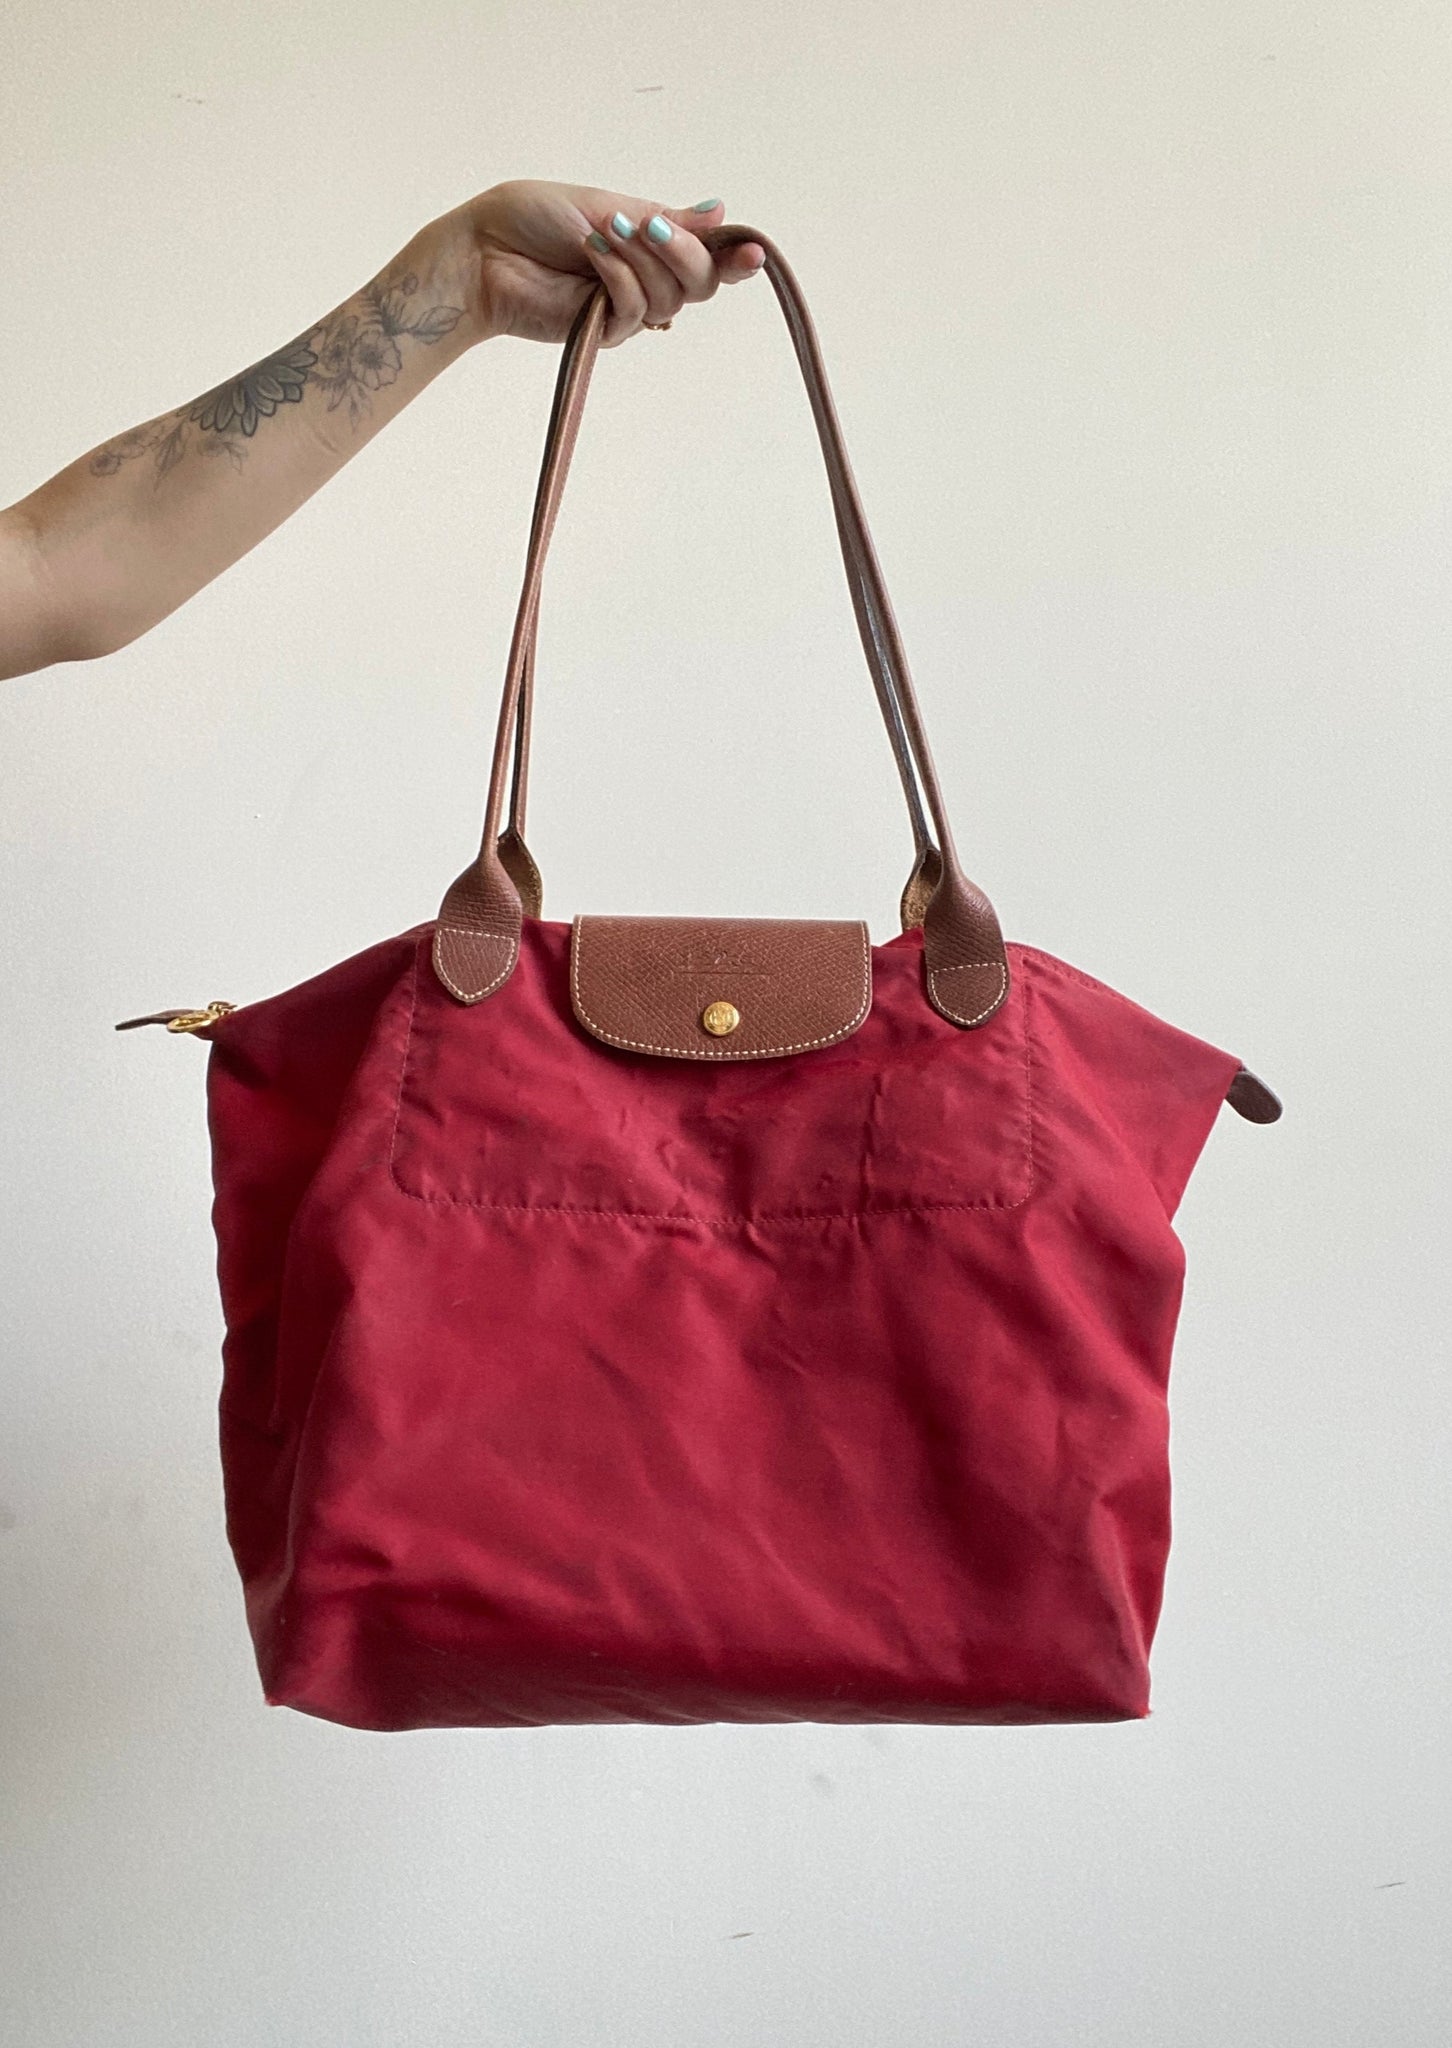 Red Longchamp Tote Bag